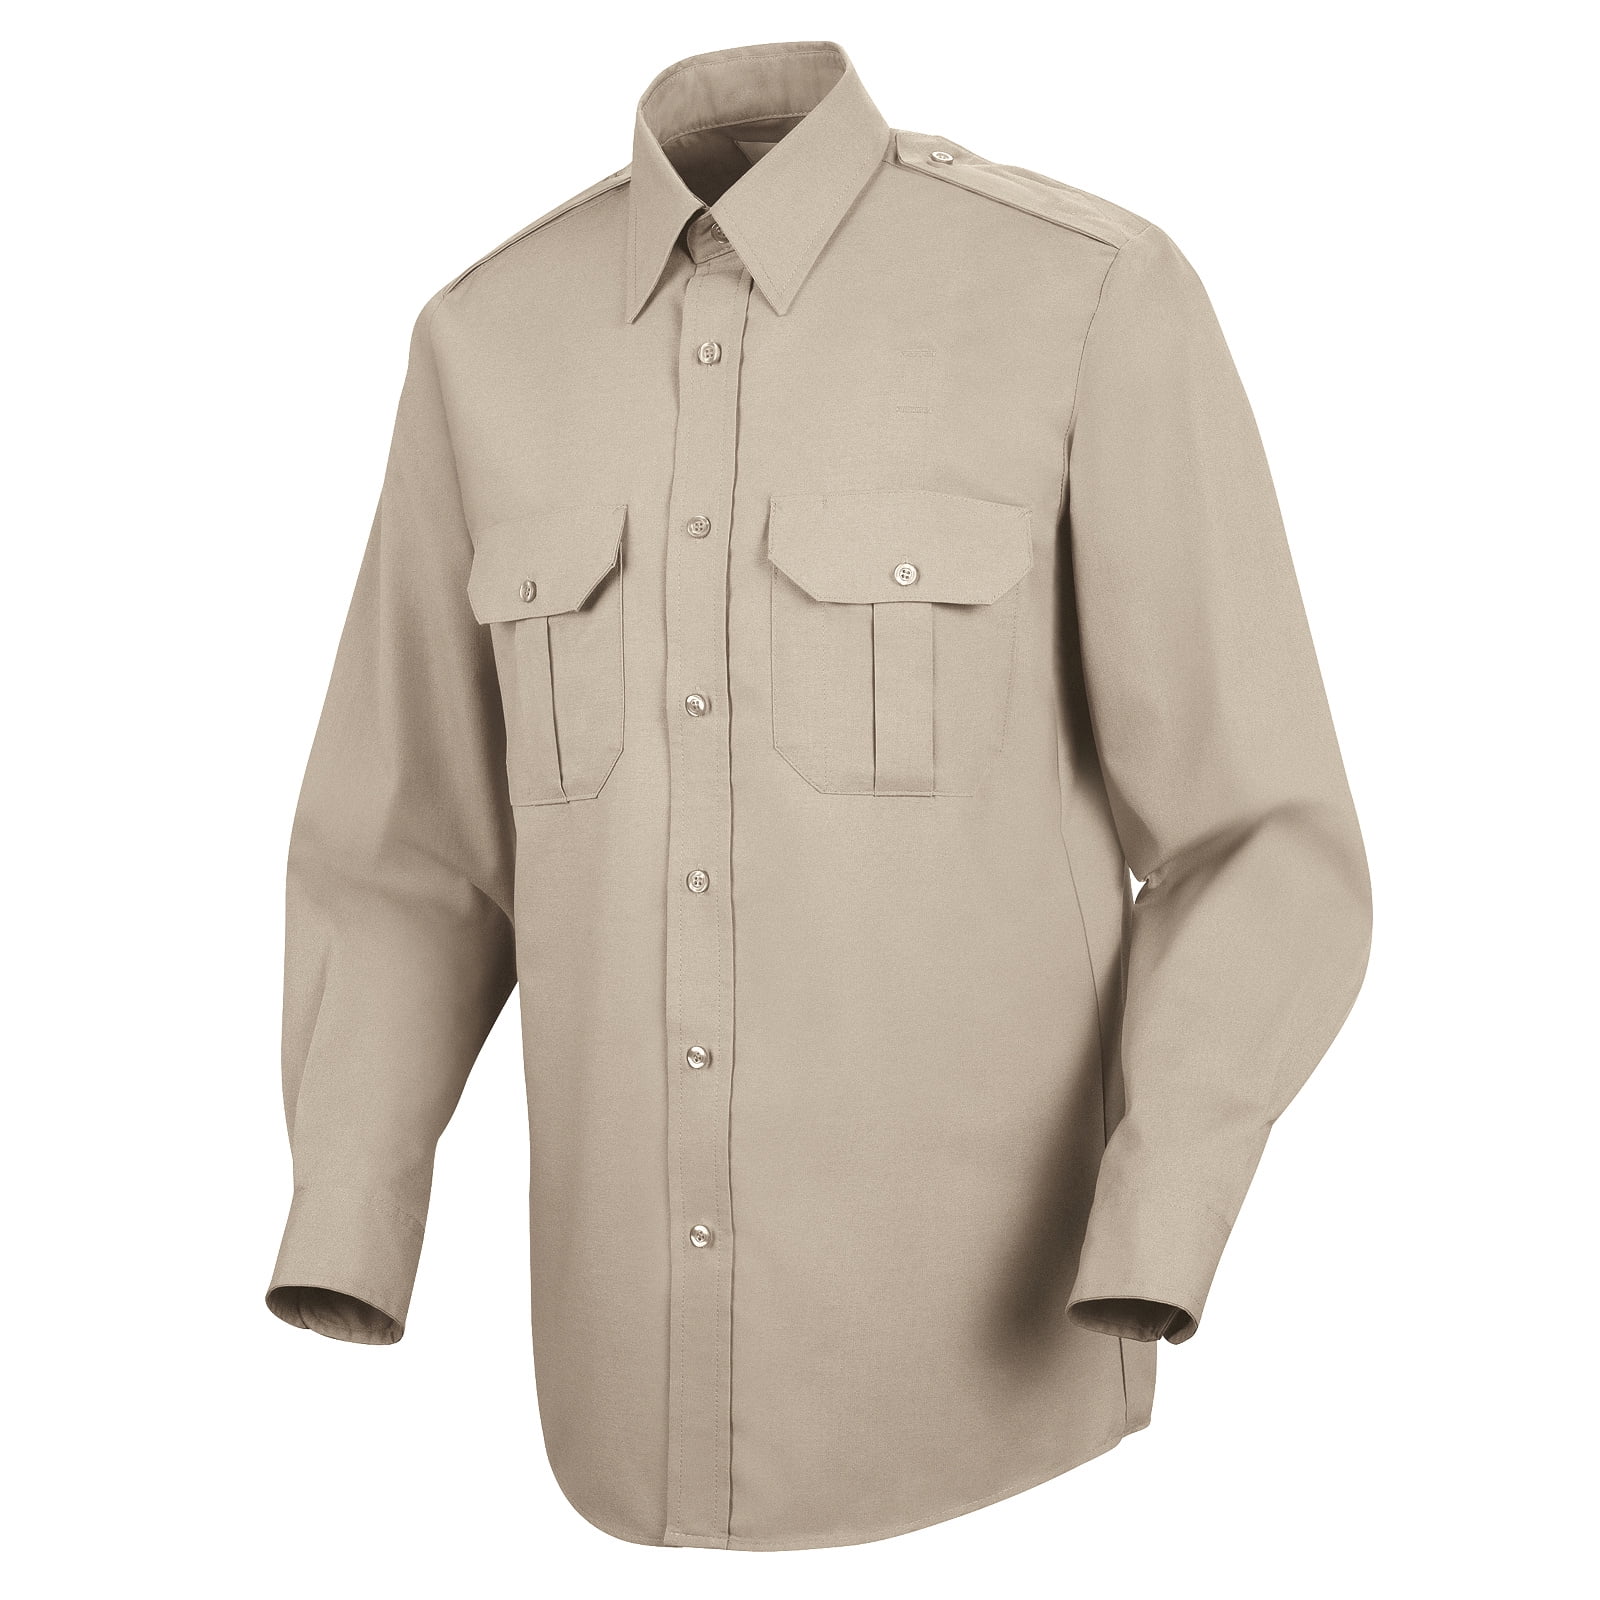 Men's Sentinel Basic Security Long Sleeve Shirt - Walmart.com